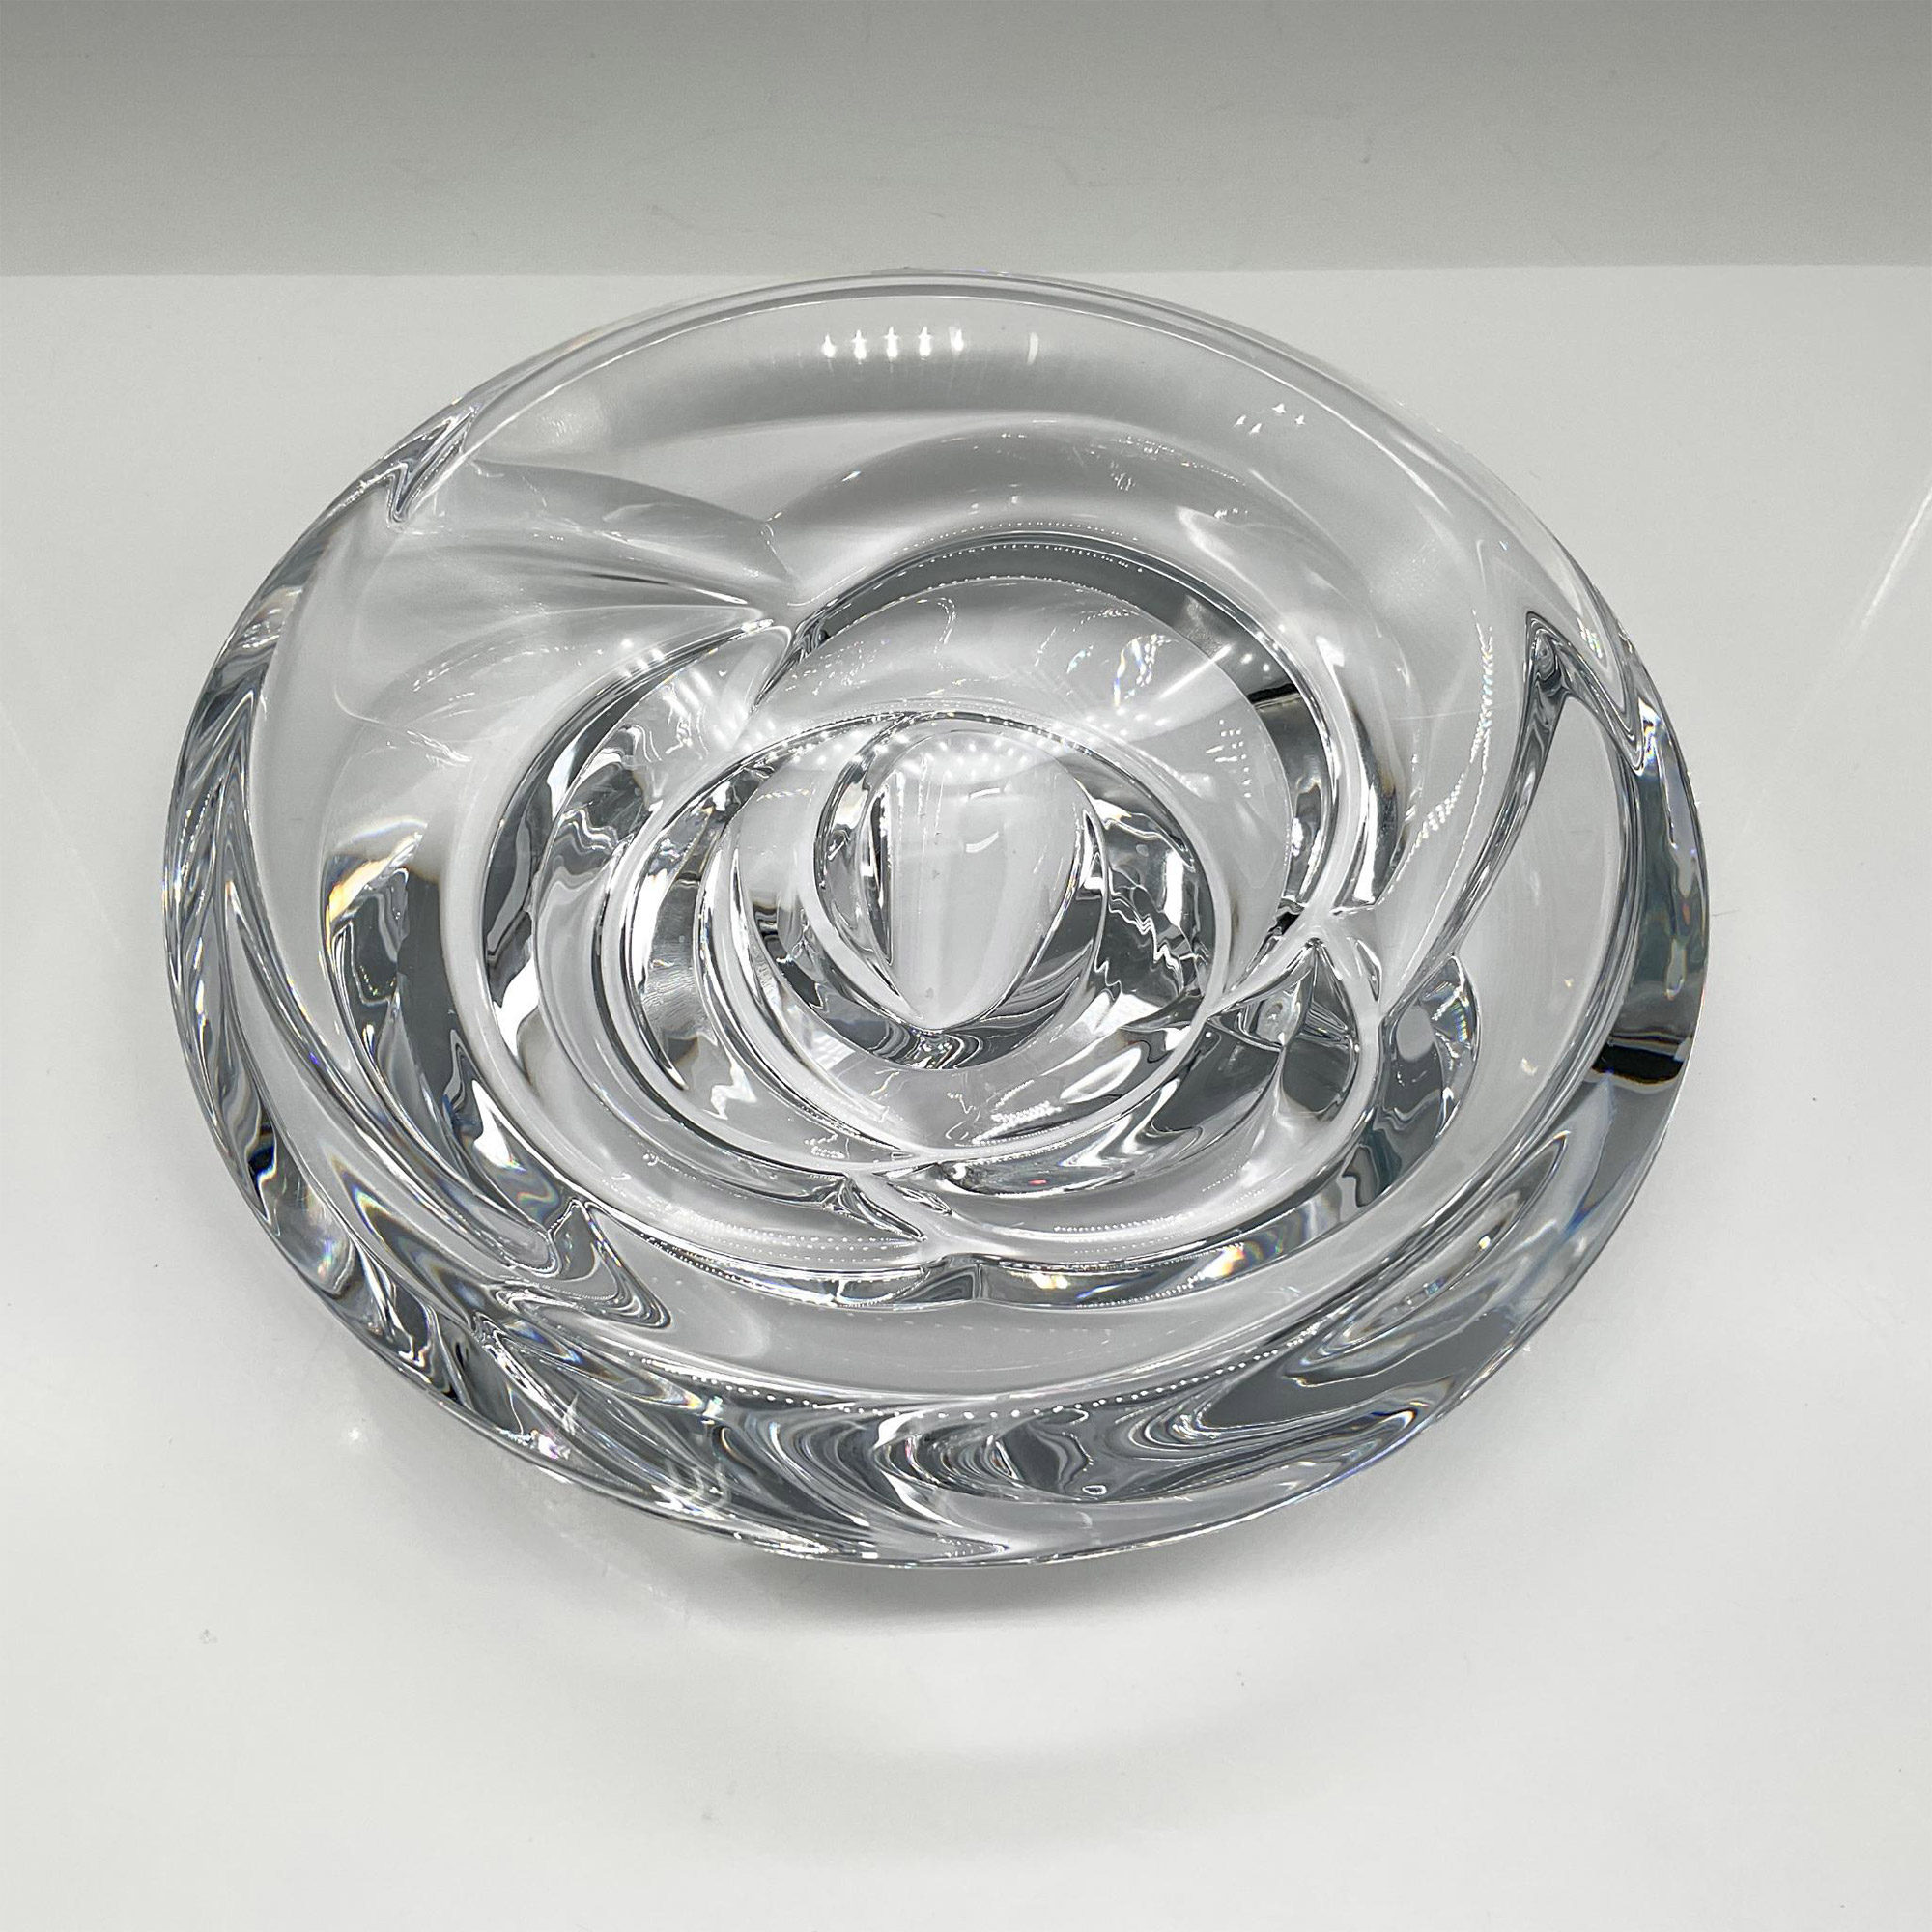 Orrefors Crystal Decorative Bowl - Image 2 of 3